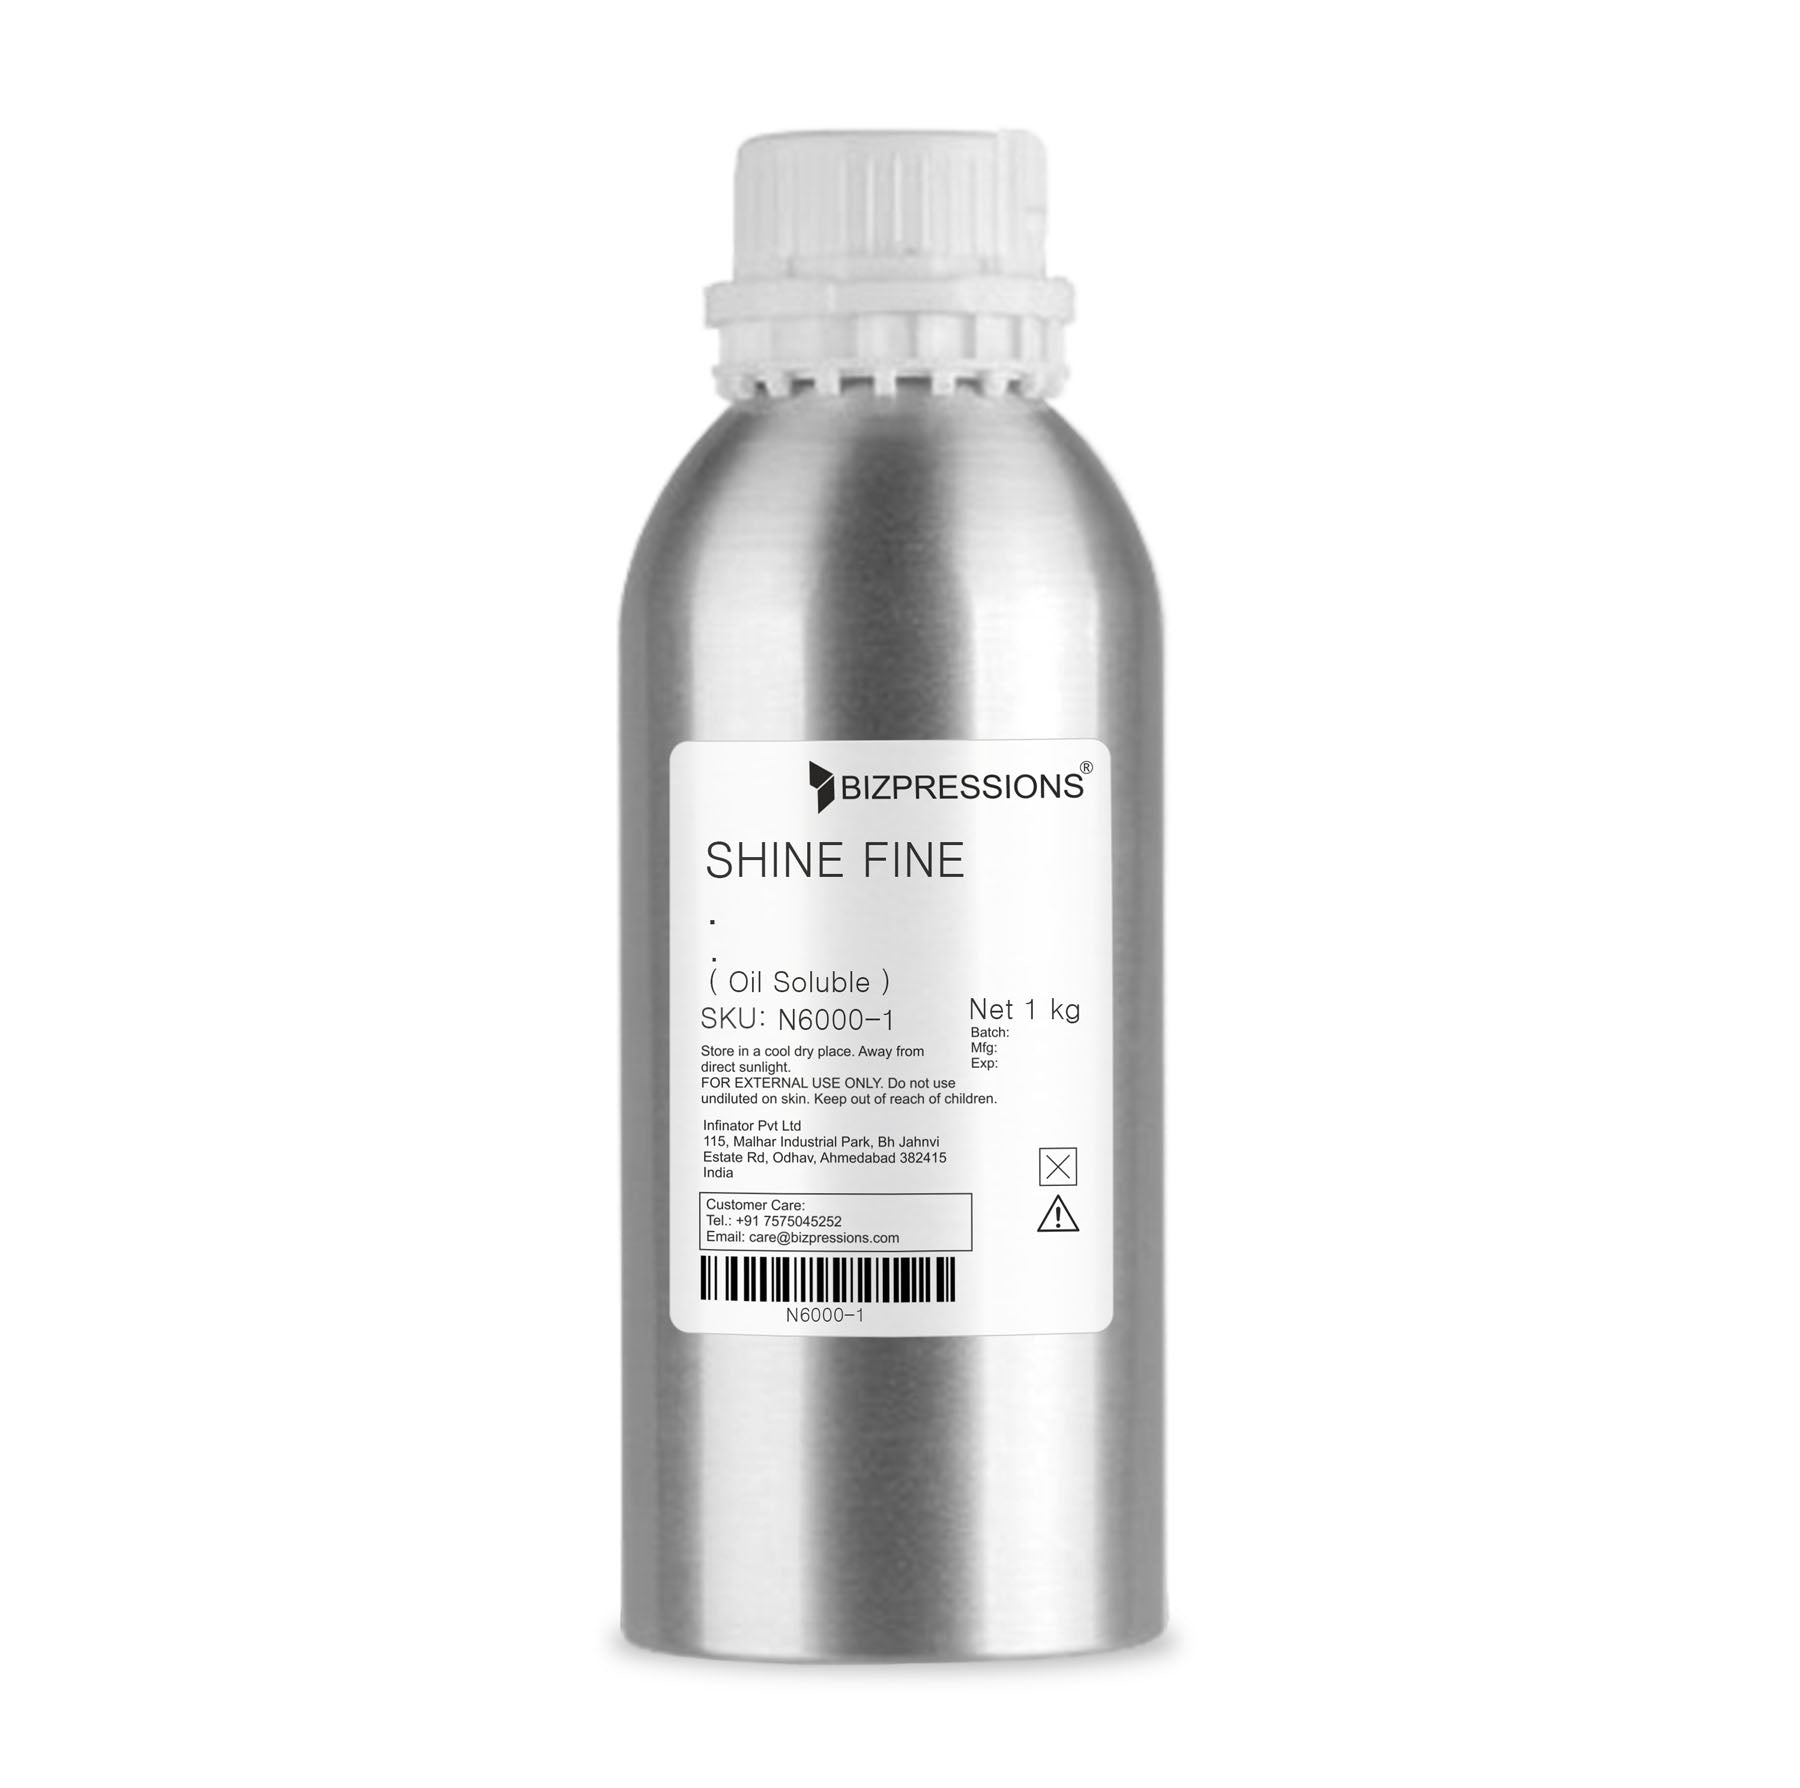 SHINE FINE - Fragrance ( Oil Soluble ) - 1 kg